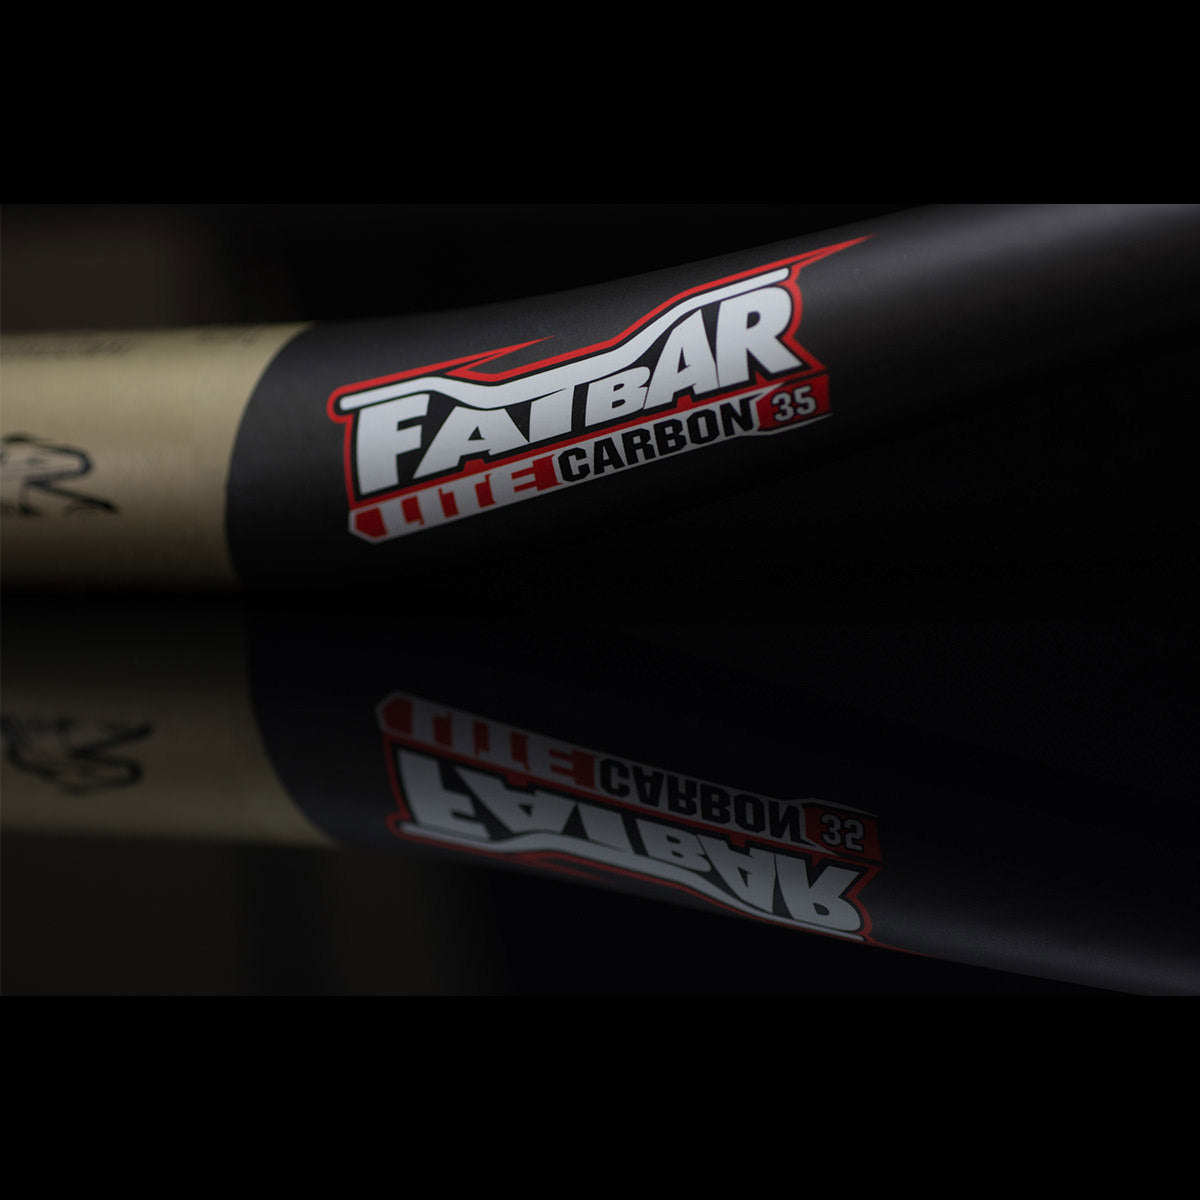 Renthal Fatbar Lite Carbon 35（レンサル ファットバー ライト